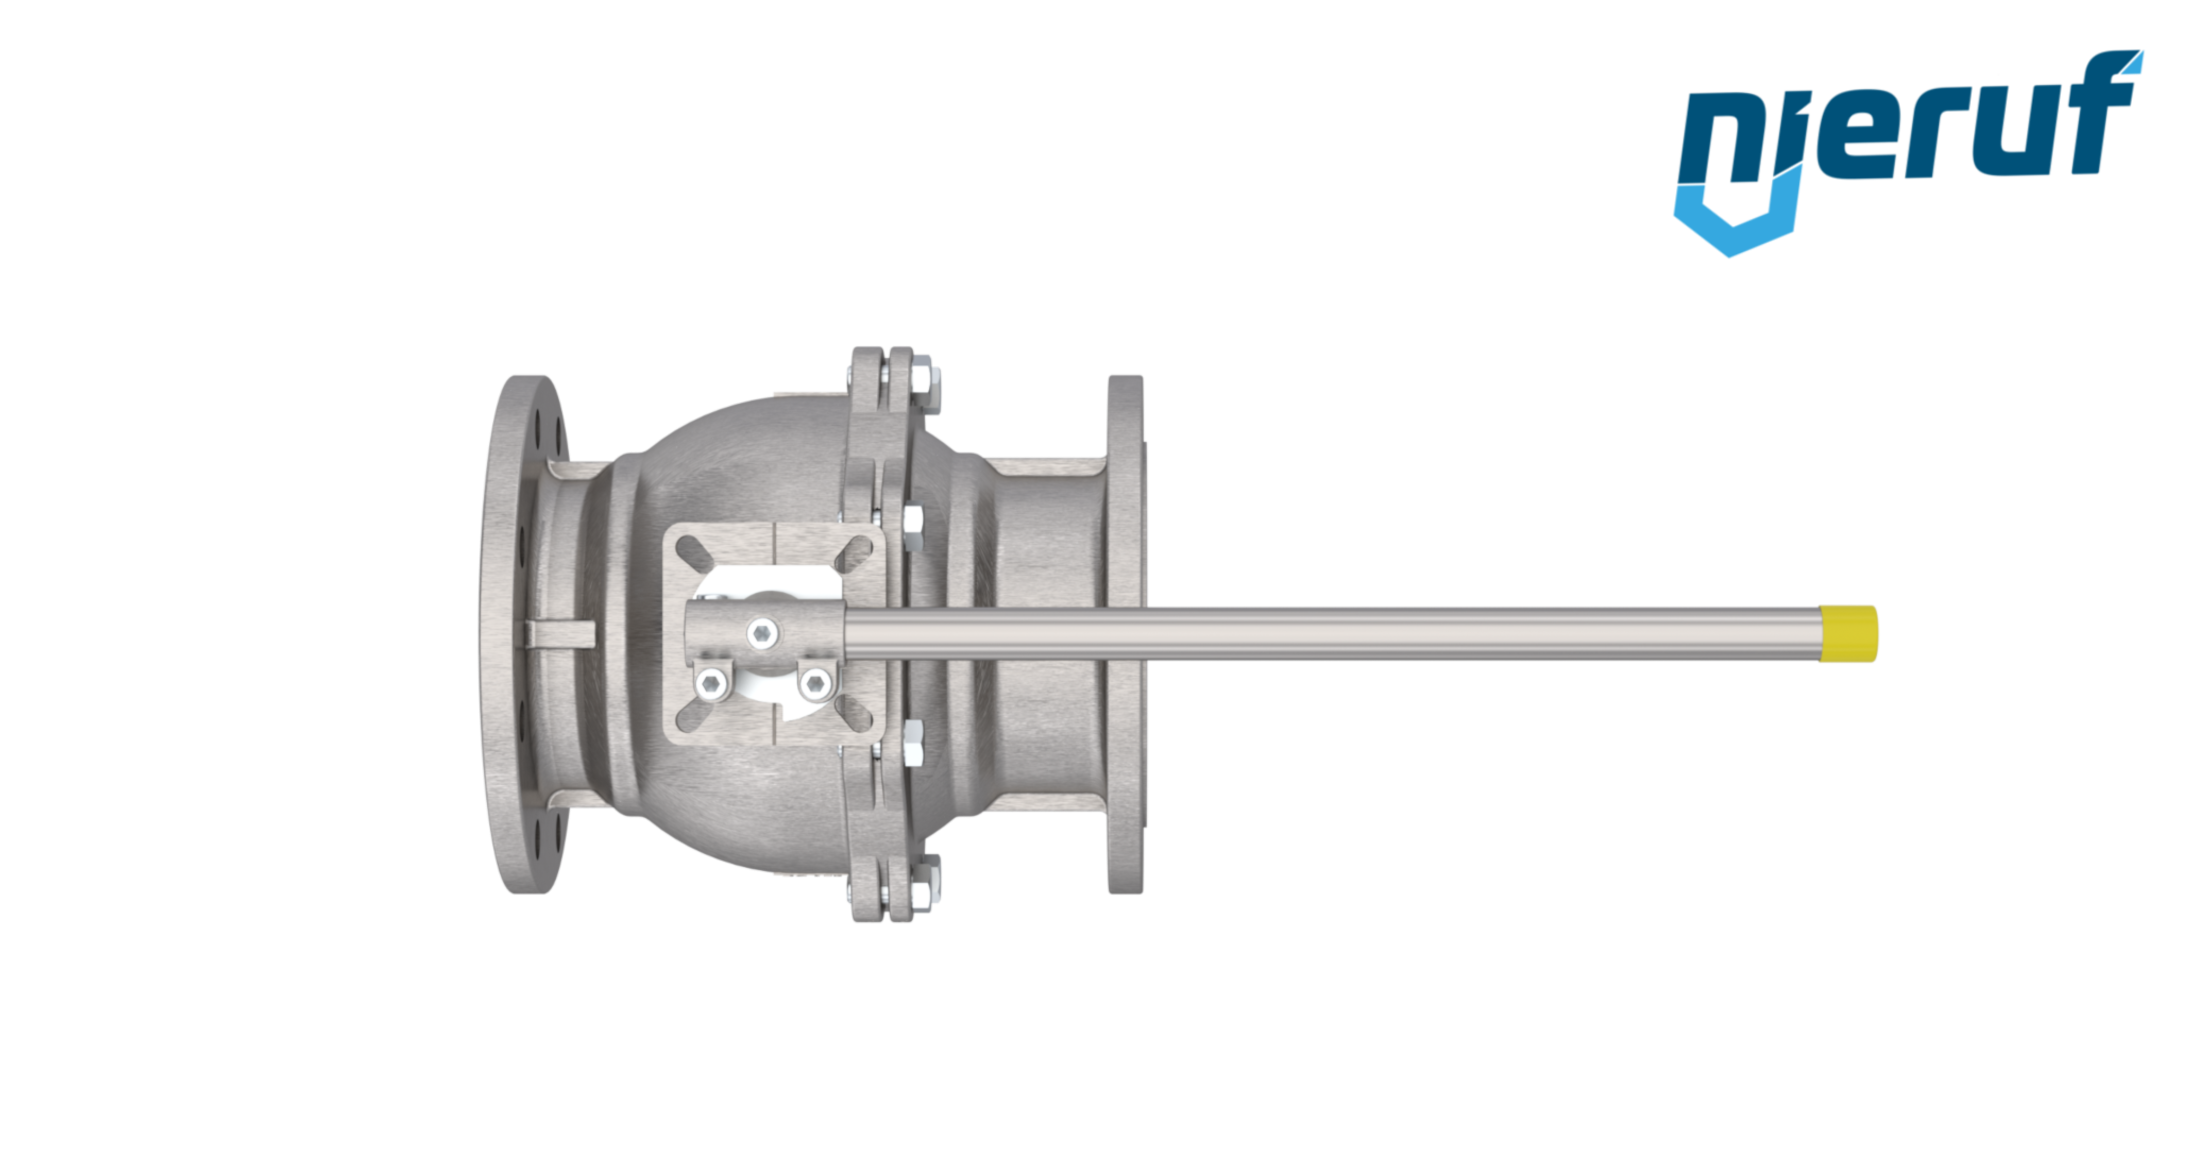 Steam-flange ball valve DN125 FK05 stainless steel 1.4408